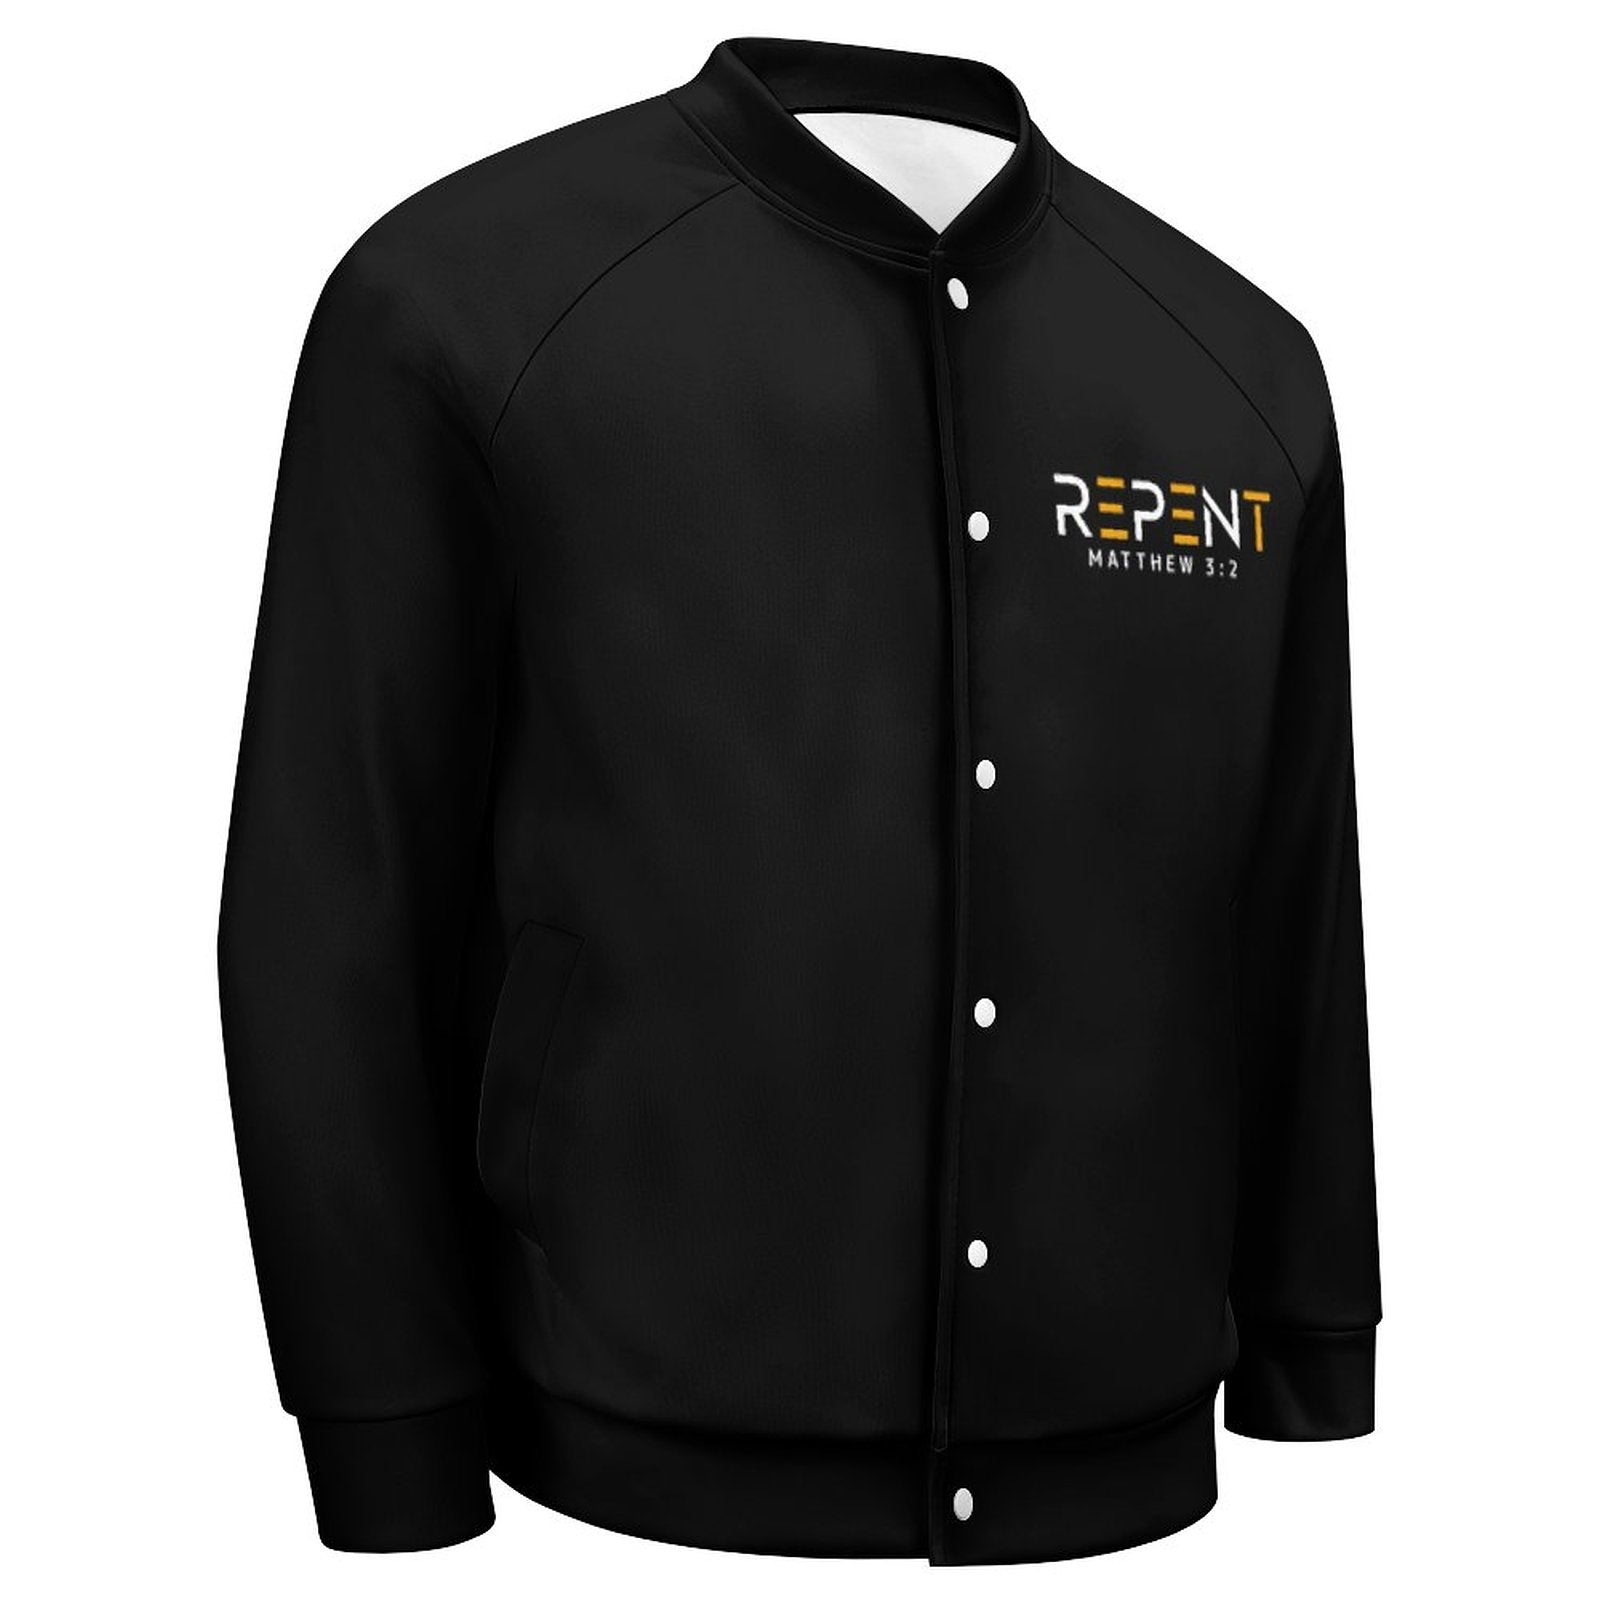 Repent Men's Christian Jacket SALE-Personal Design